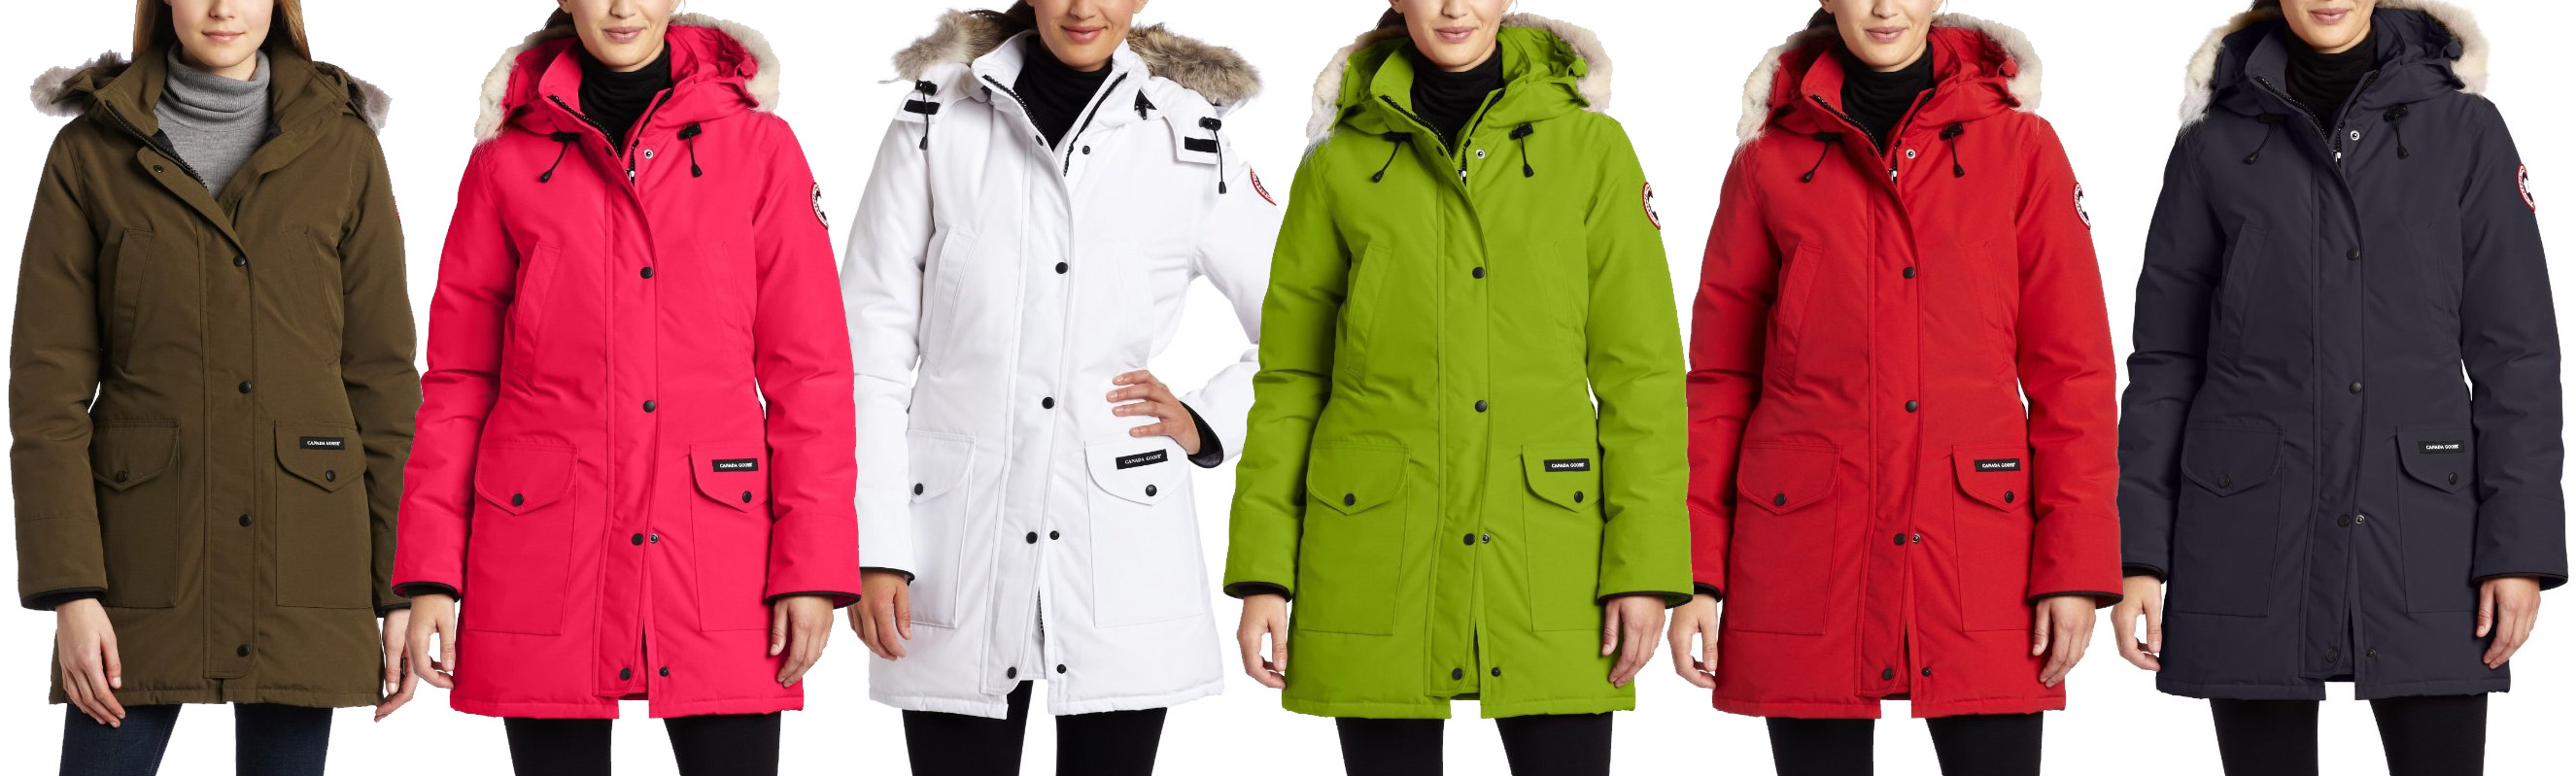 Canada Goose kids outlet shop - Canada Goose Trillium Parka best winter Parka? - My Fashion Wants